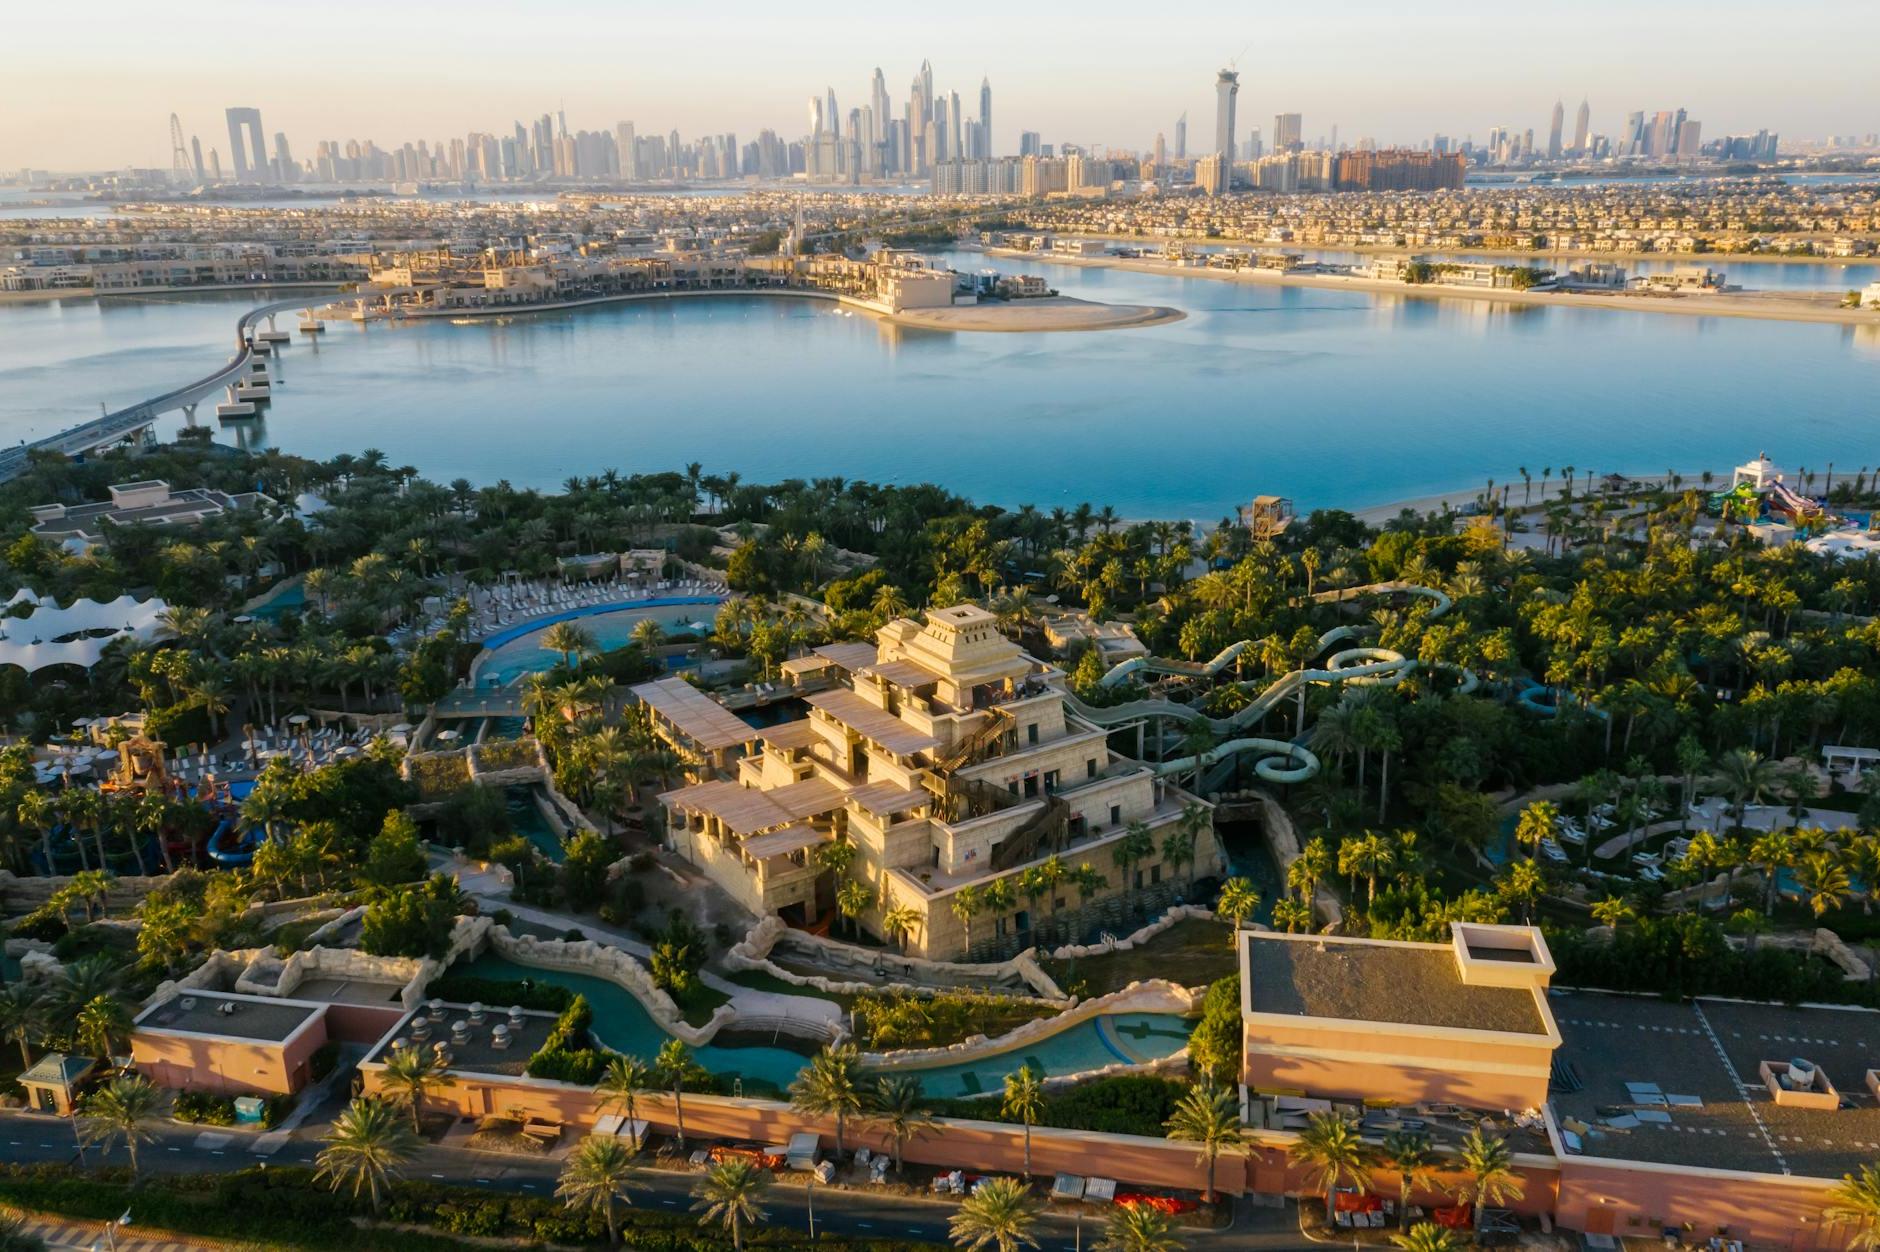 Aquaventure Waterpark in Dubai